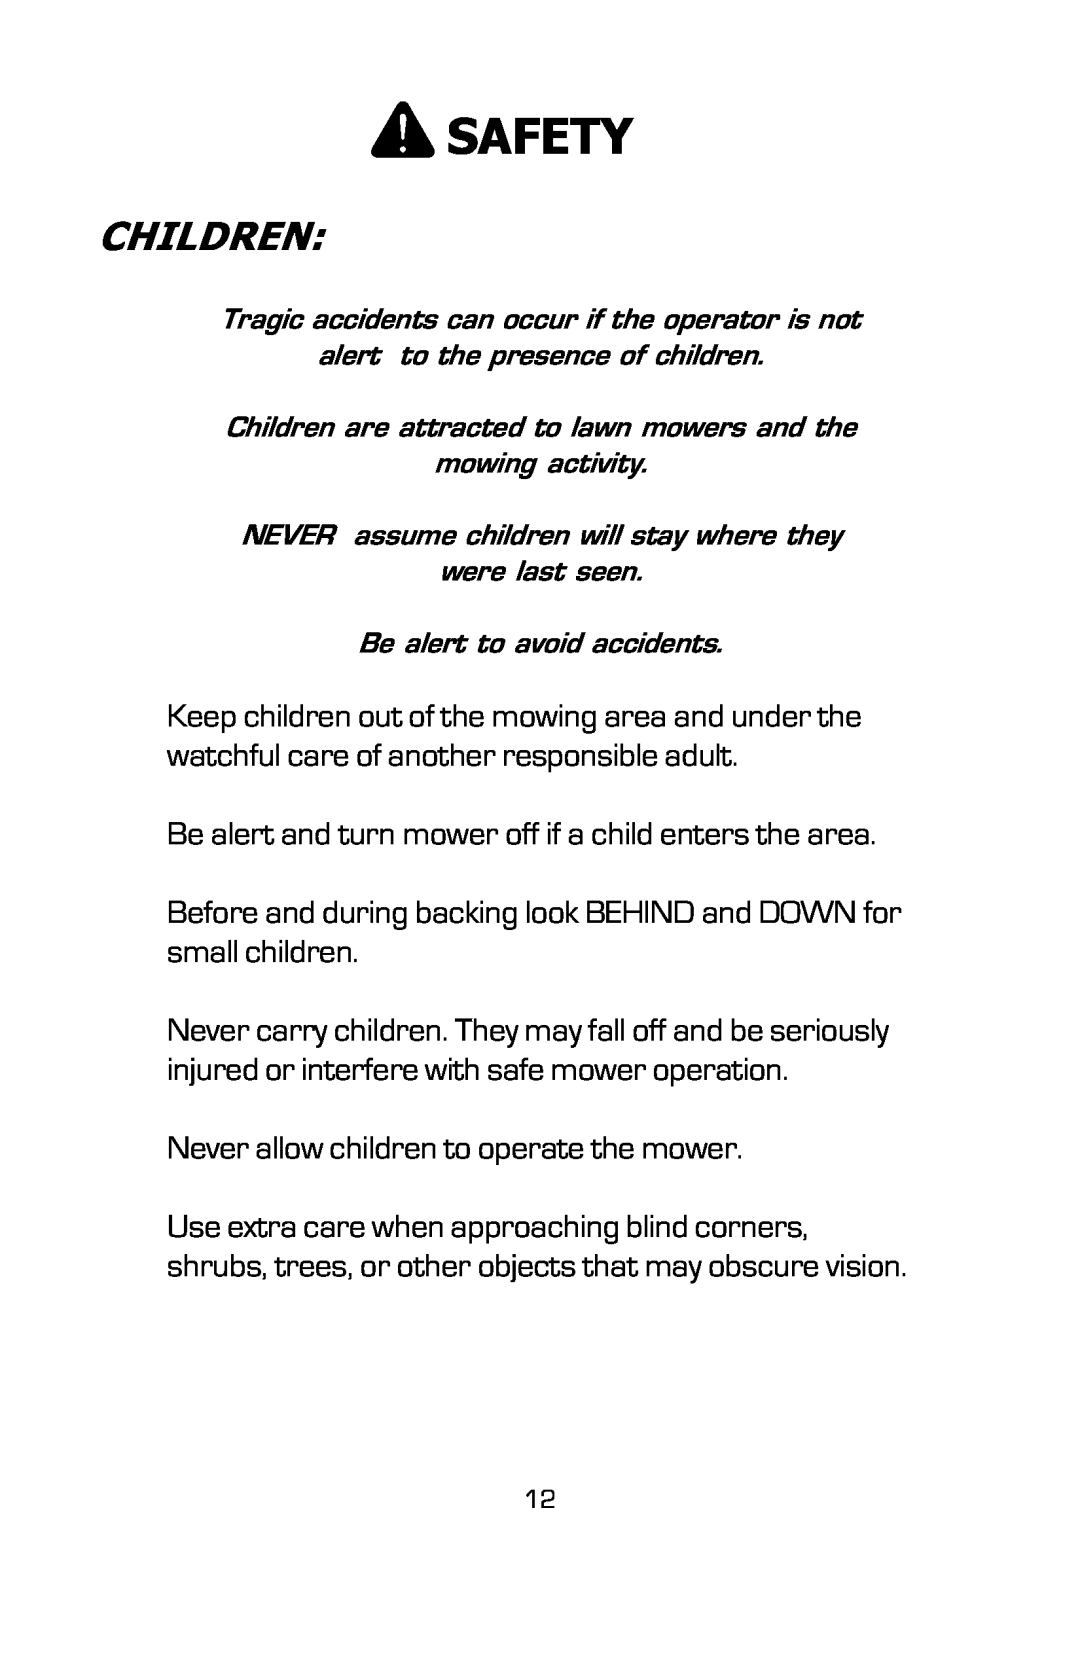 Dixon 16134-0803 manual Safety, Children 